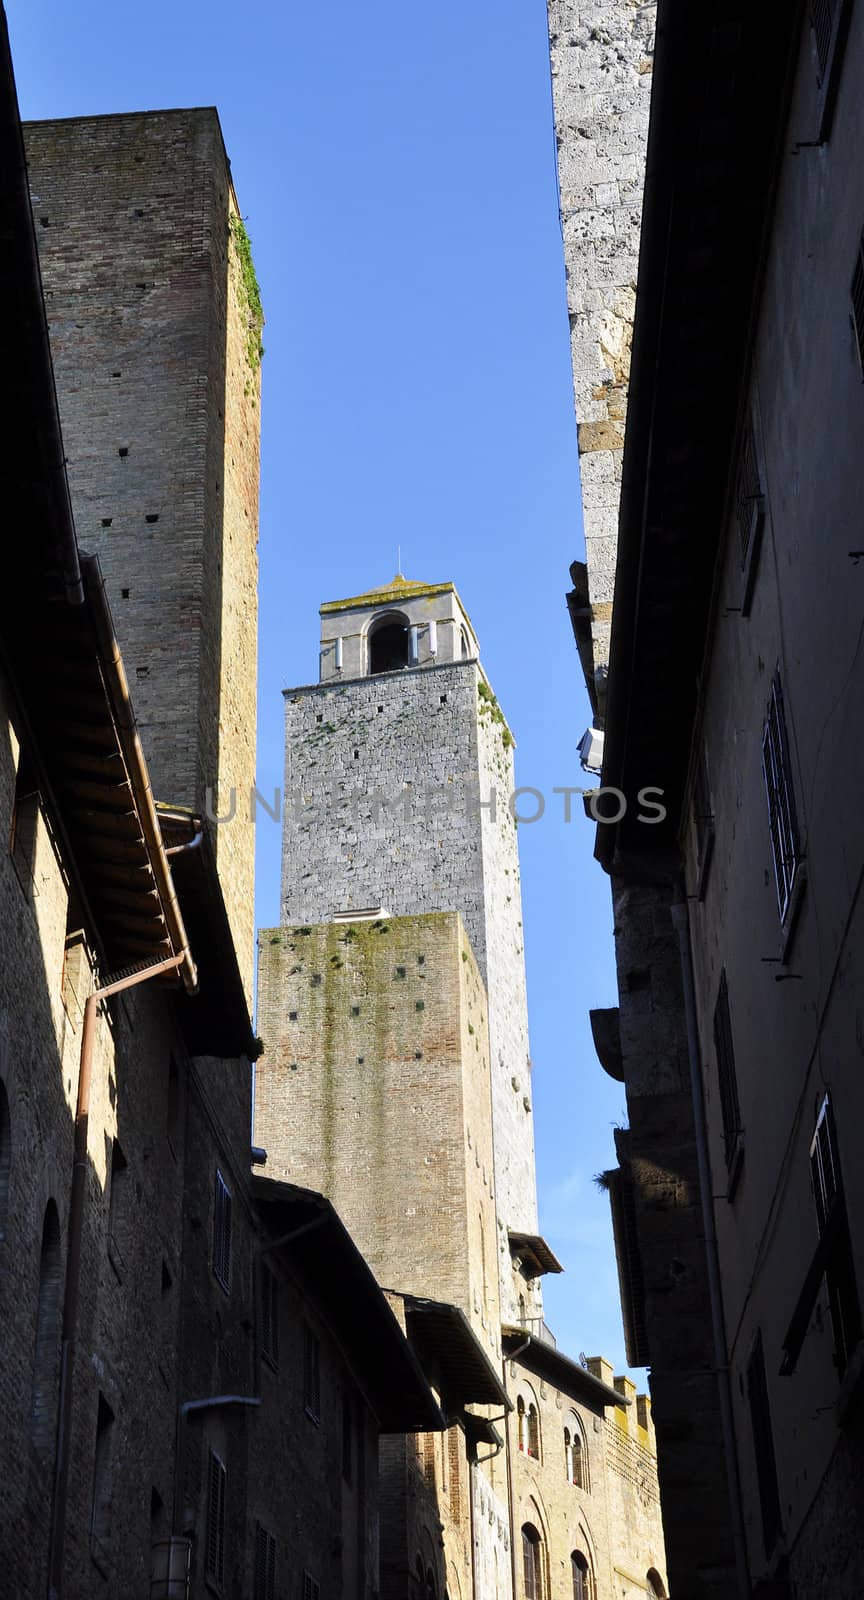 Tower in San gimignano by dutourdumonde